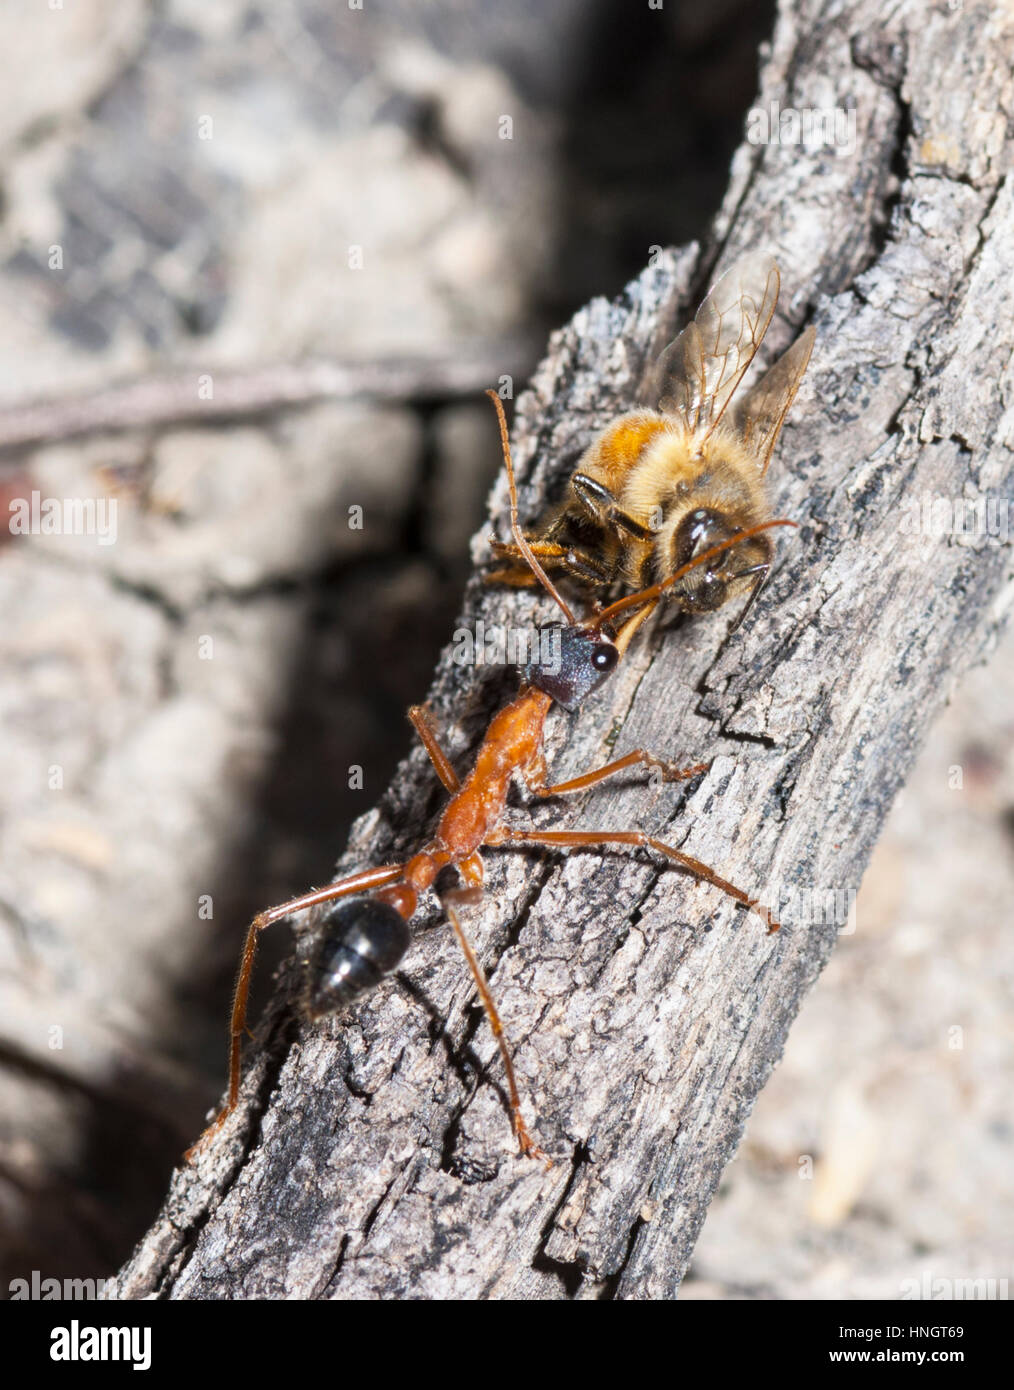 Bull Ant (Myrmecia nigriceps) with prey, Wentworth, New South Wales, Australia Stock Photo